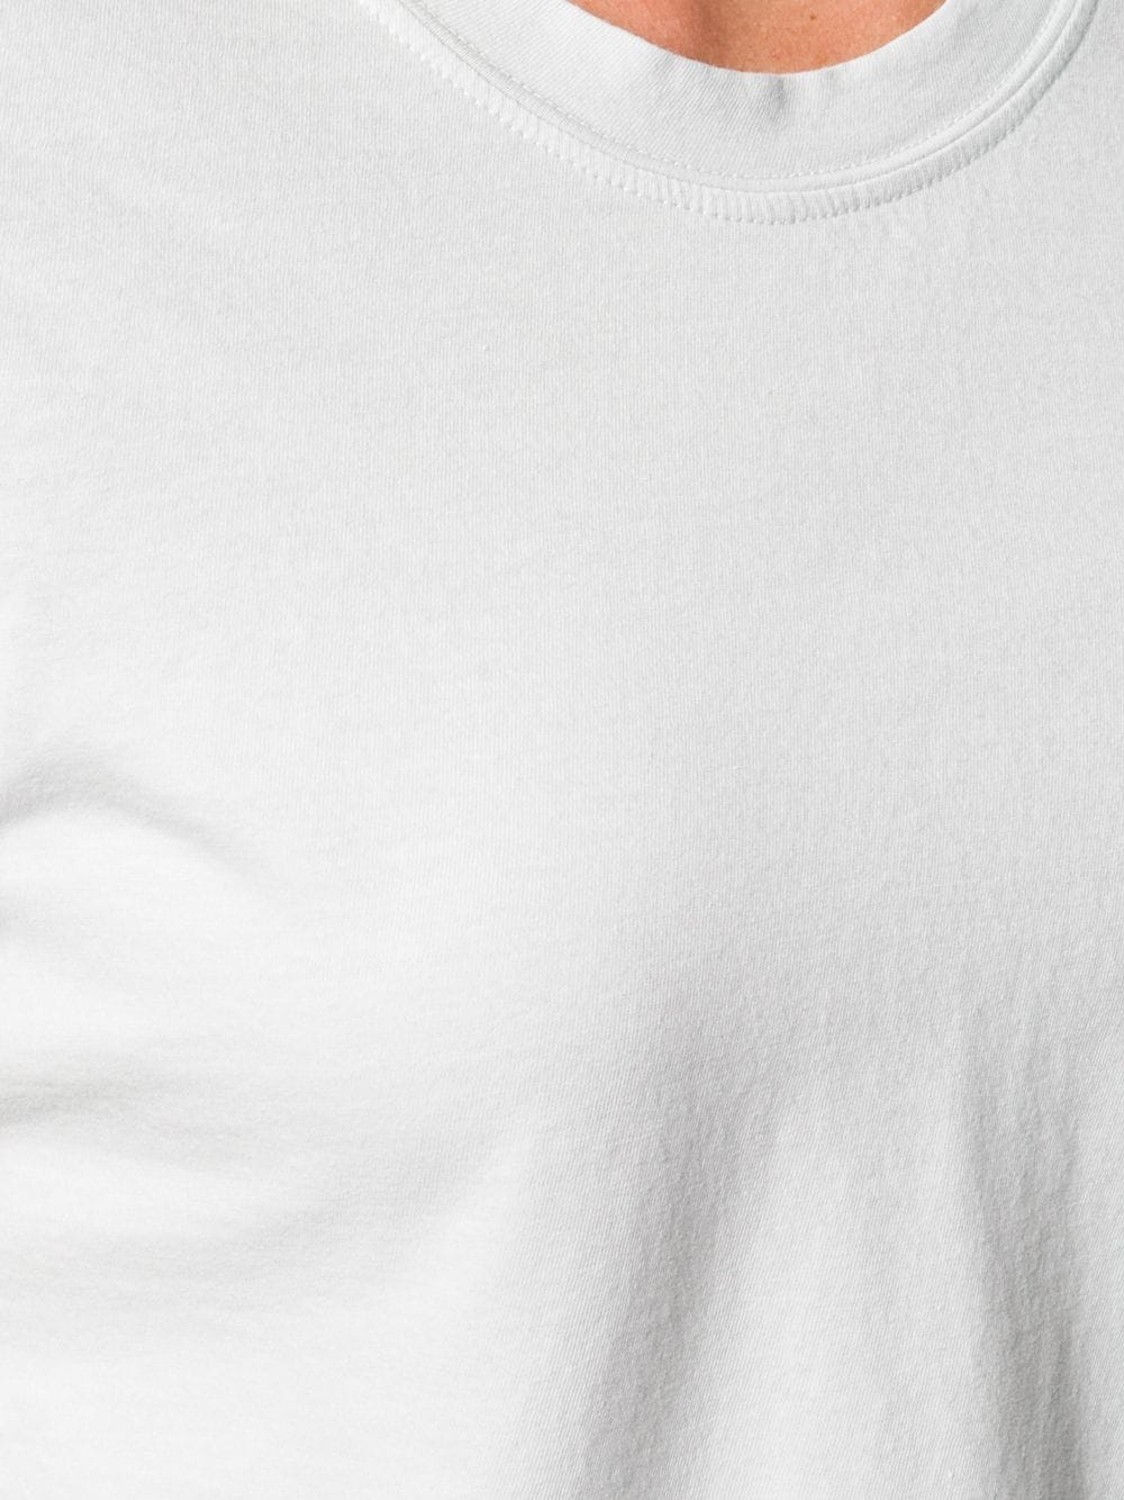 shop James Perse  T-shirts: T-shirts James Perse, girocollo, manica corta, fit regolare.

Composizione: 100% cotone. number 2057